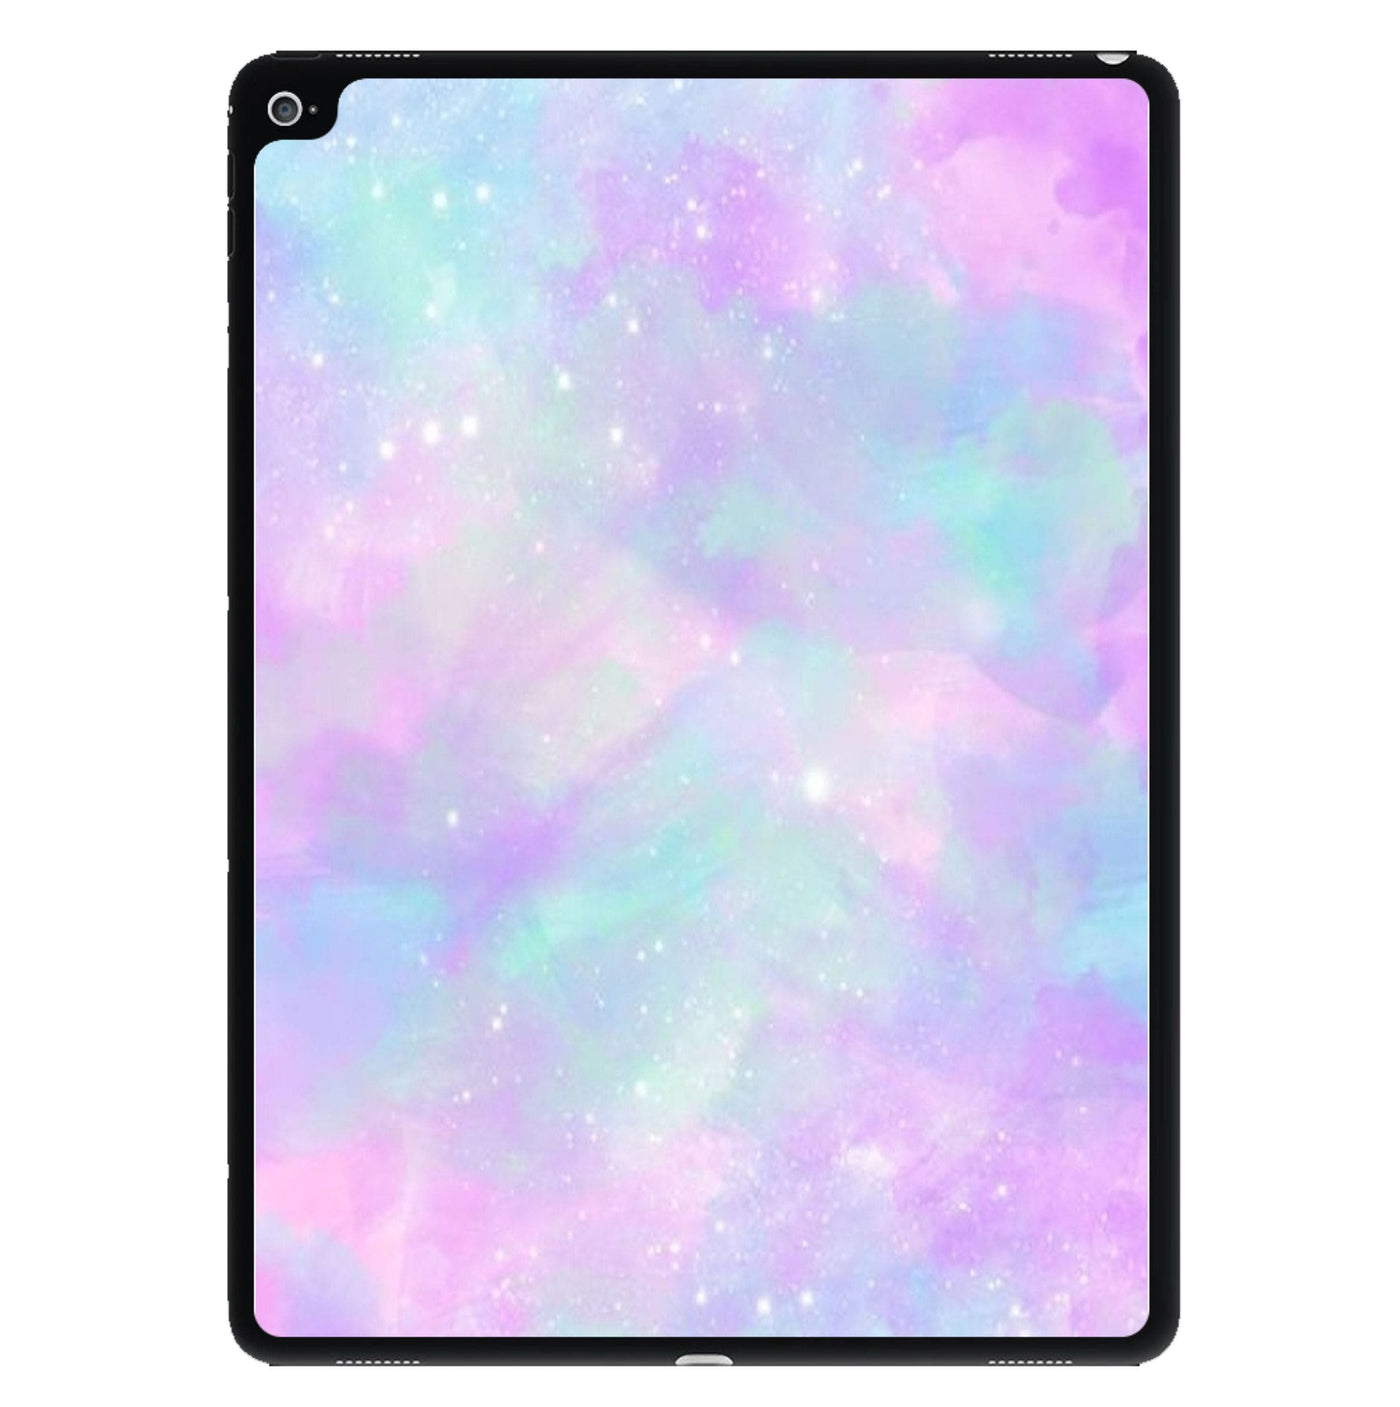 Pastel Galaxy - Tumblr Style iPad Case